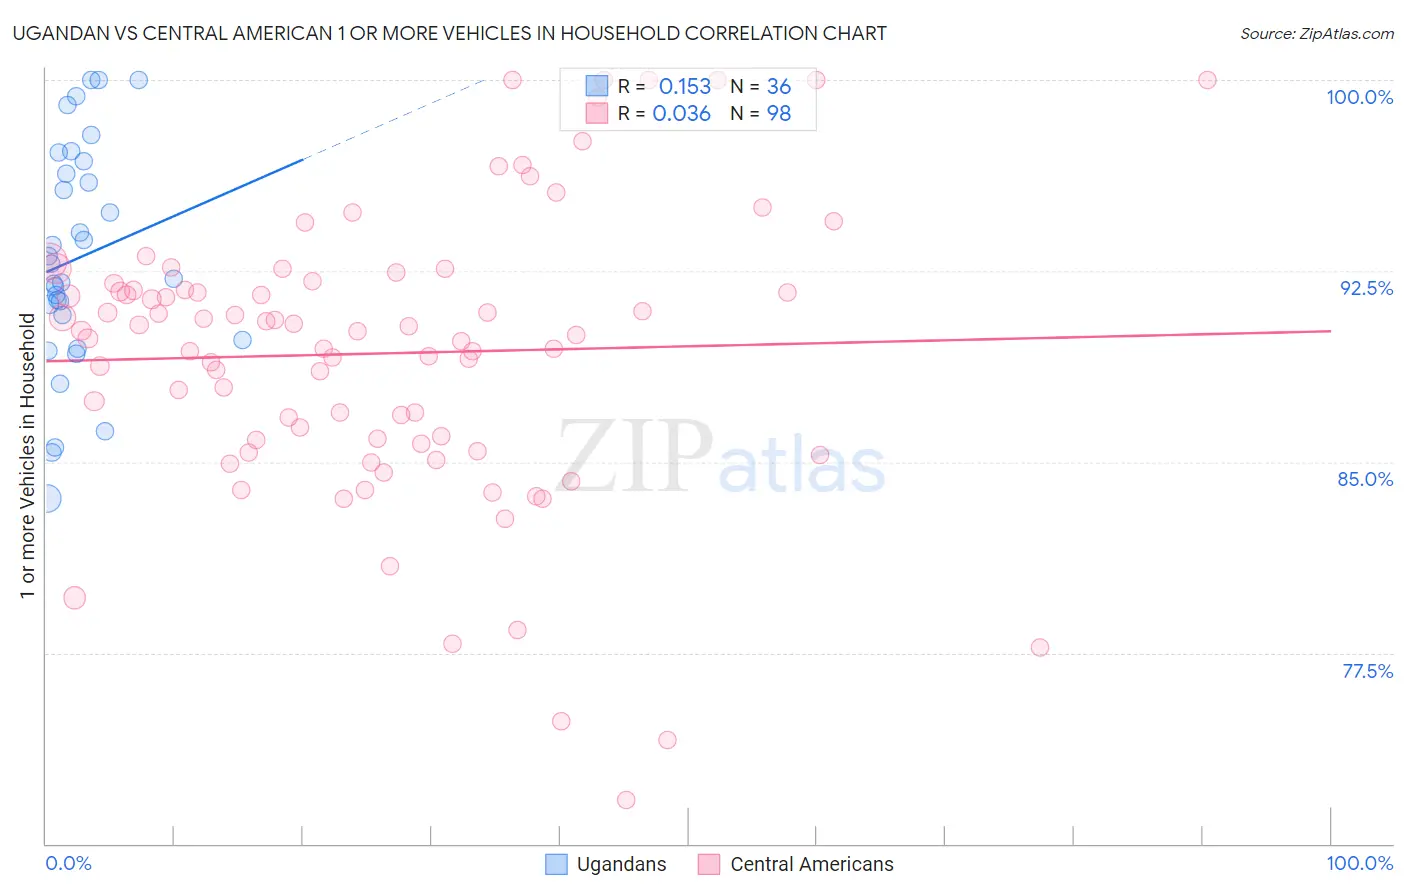 Ugandan vs Central American 1 or more Vehicles in Household